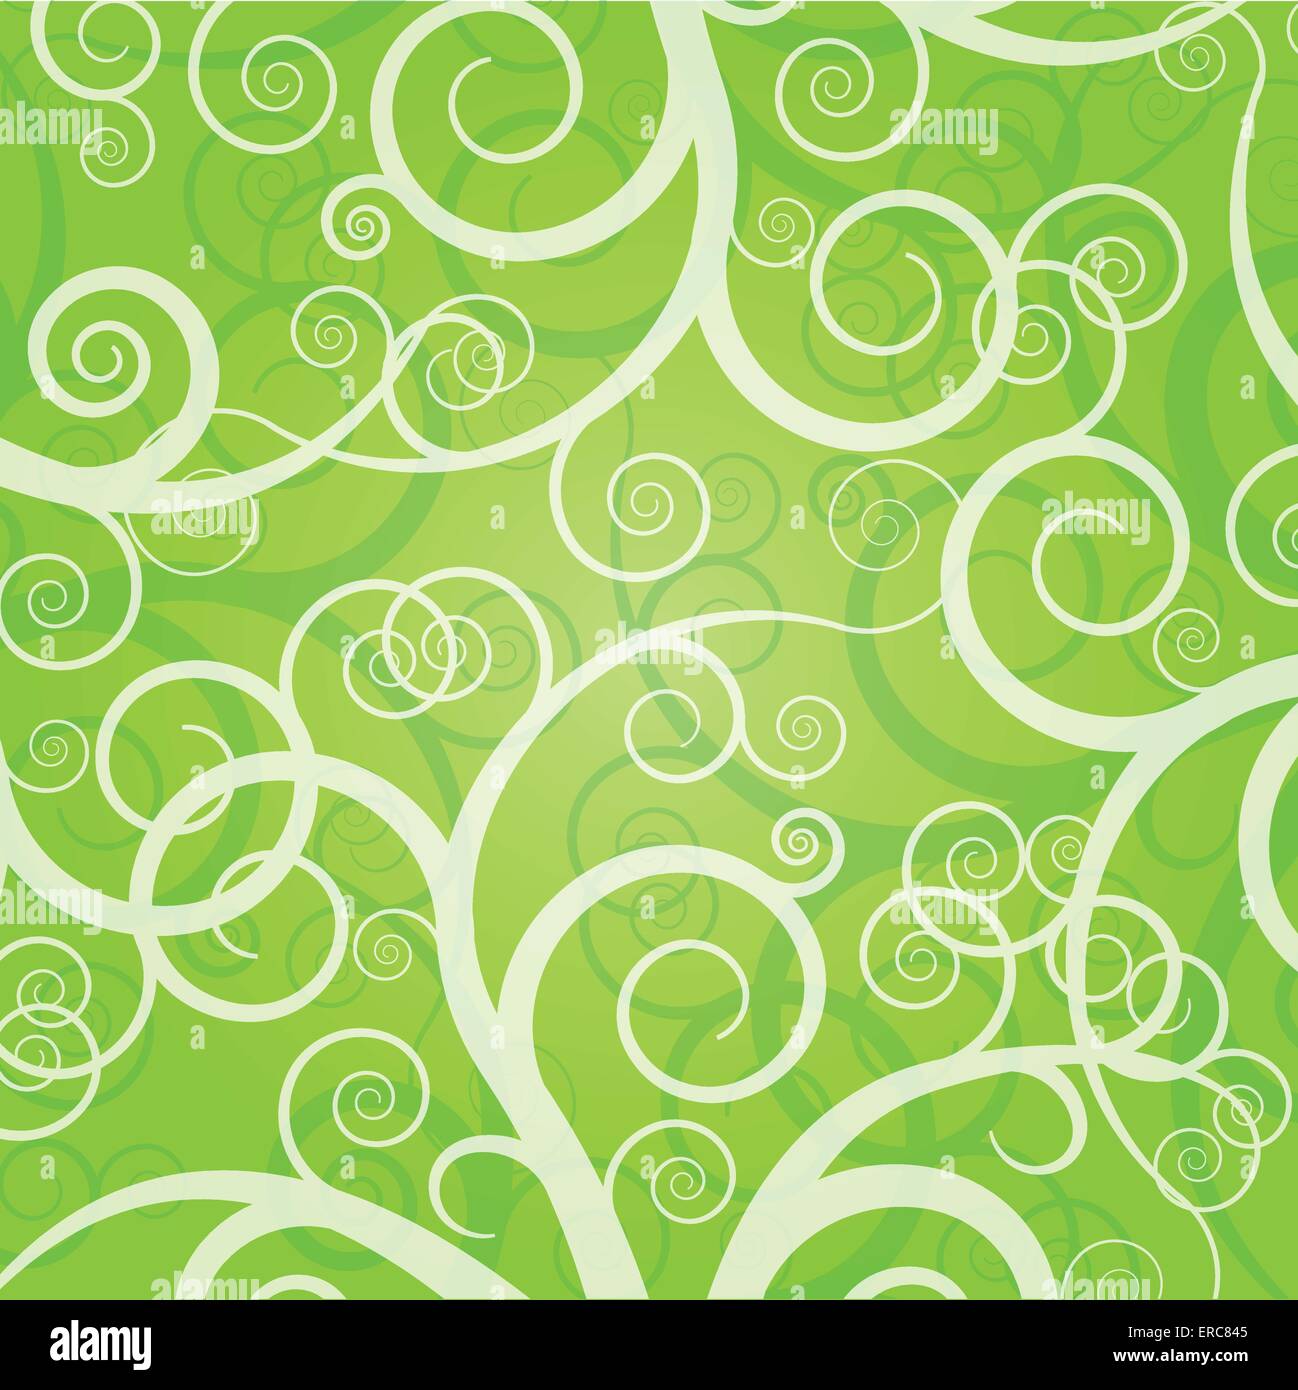 Vektor-Illustration von Grün floral Ornament Hintergrund Stock Vektor